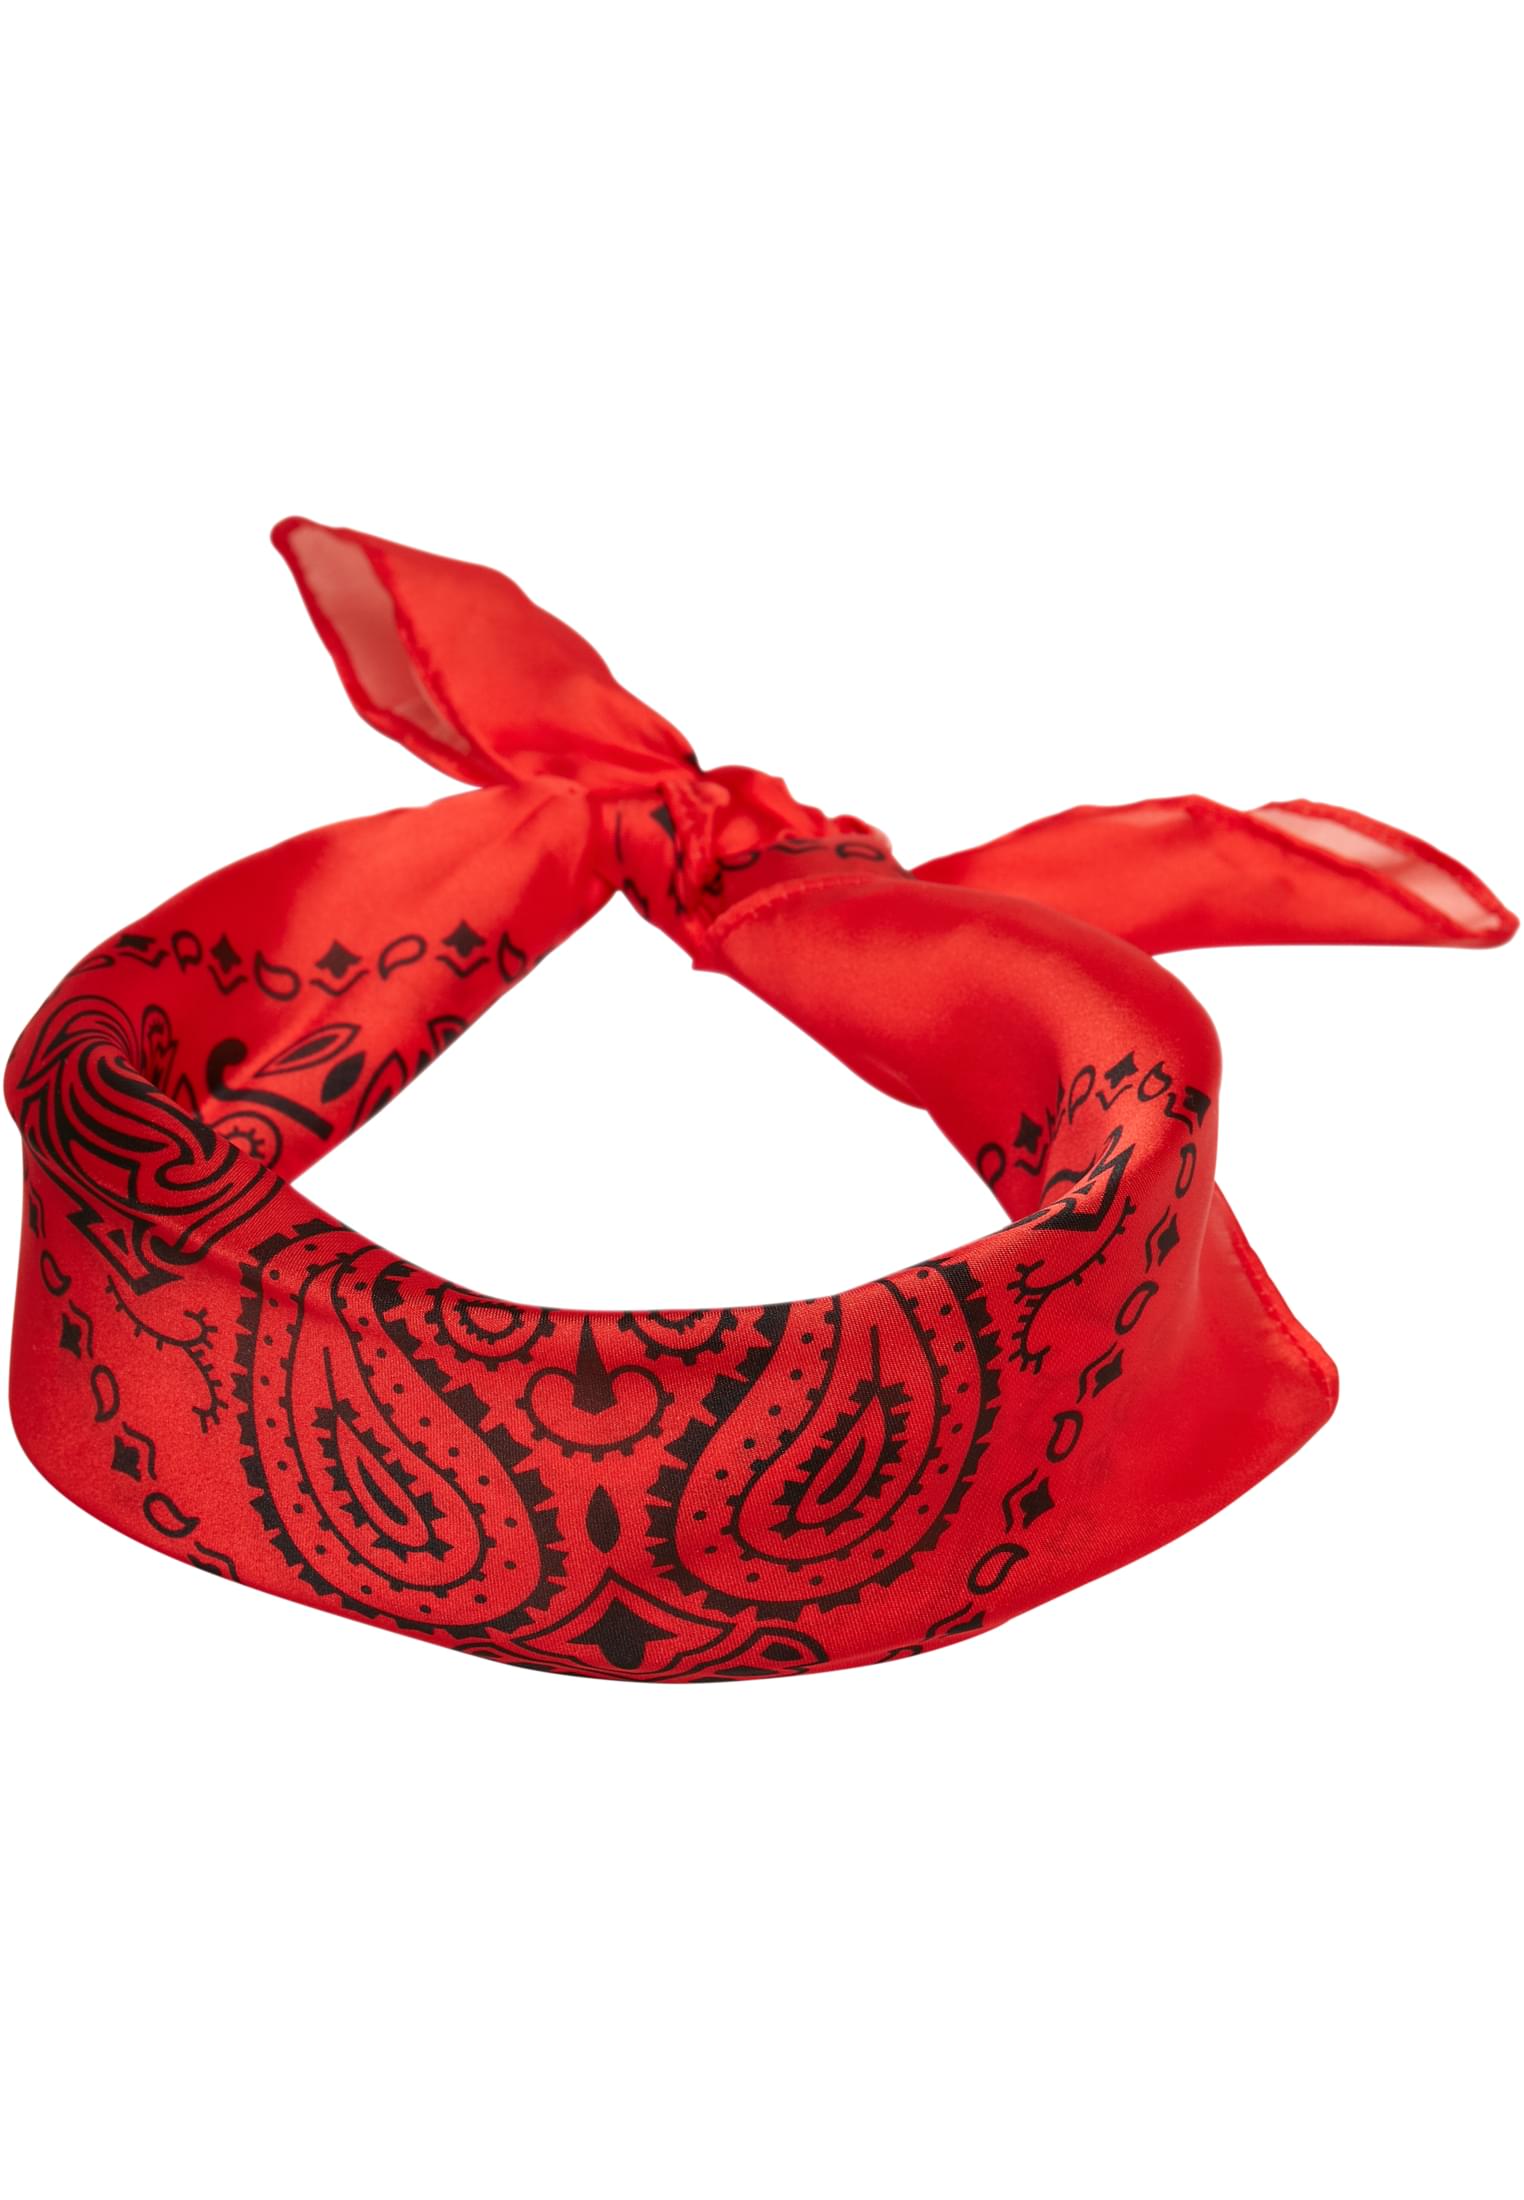 Masken Satin Bandana 2-Pack in Farbe black/red